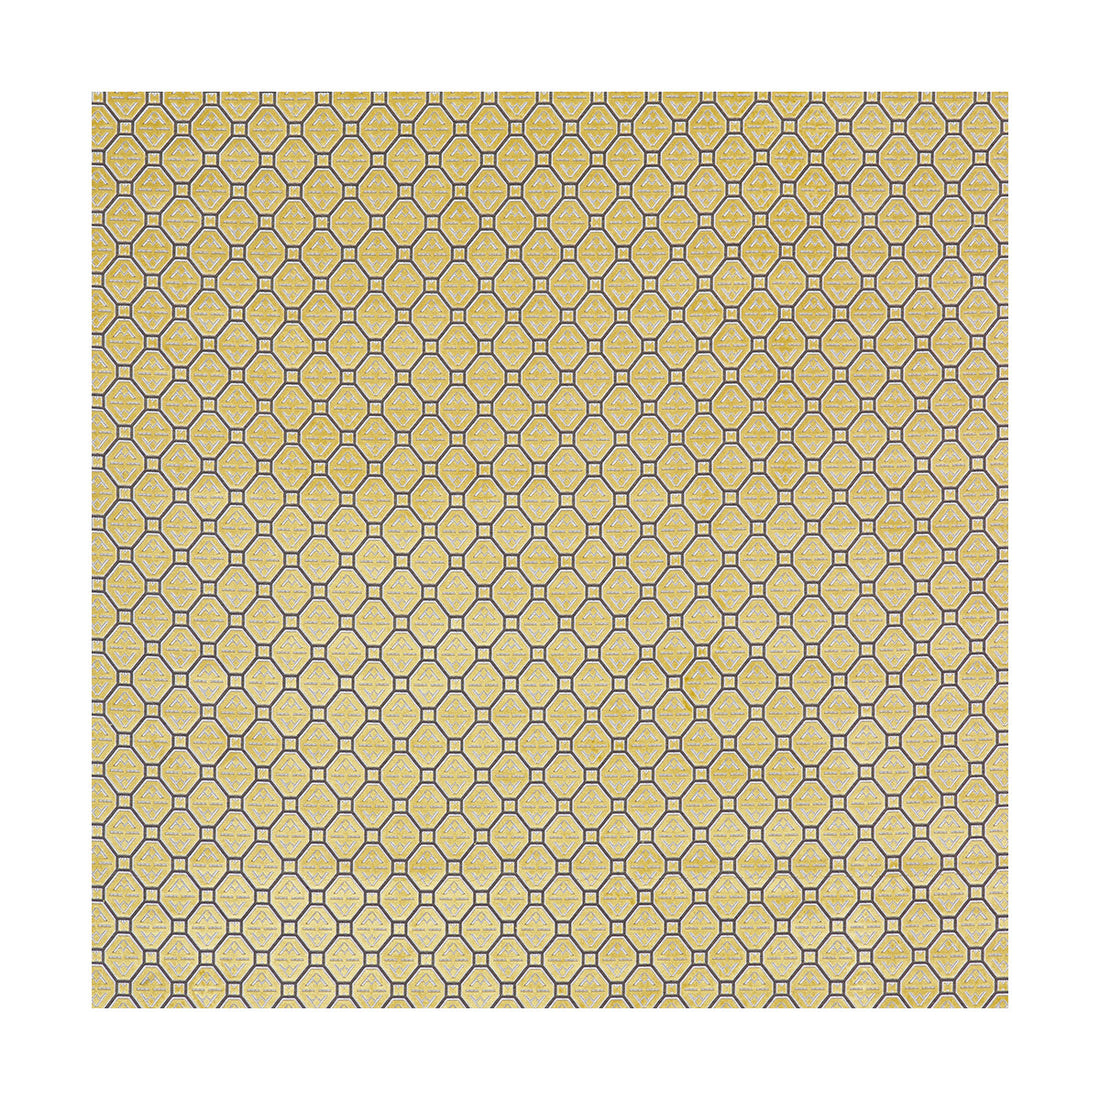 Calabrez fabric in amarillo color - pattern LCT5358.006.0 - by Gaston y Daniela in the Lorenzo Castillo III collection